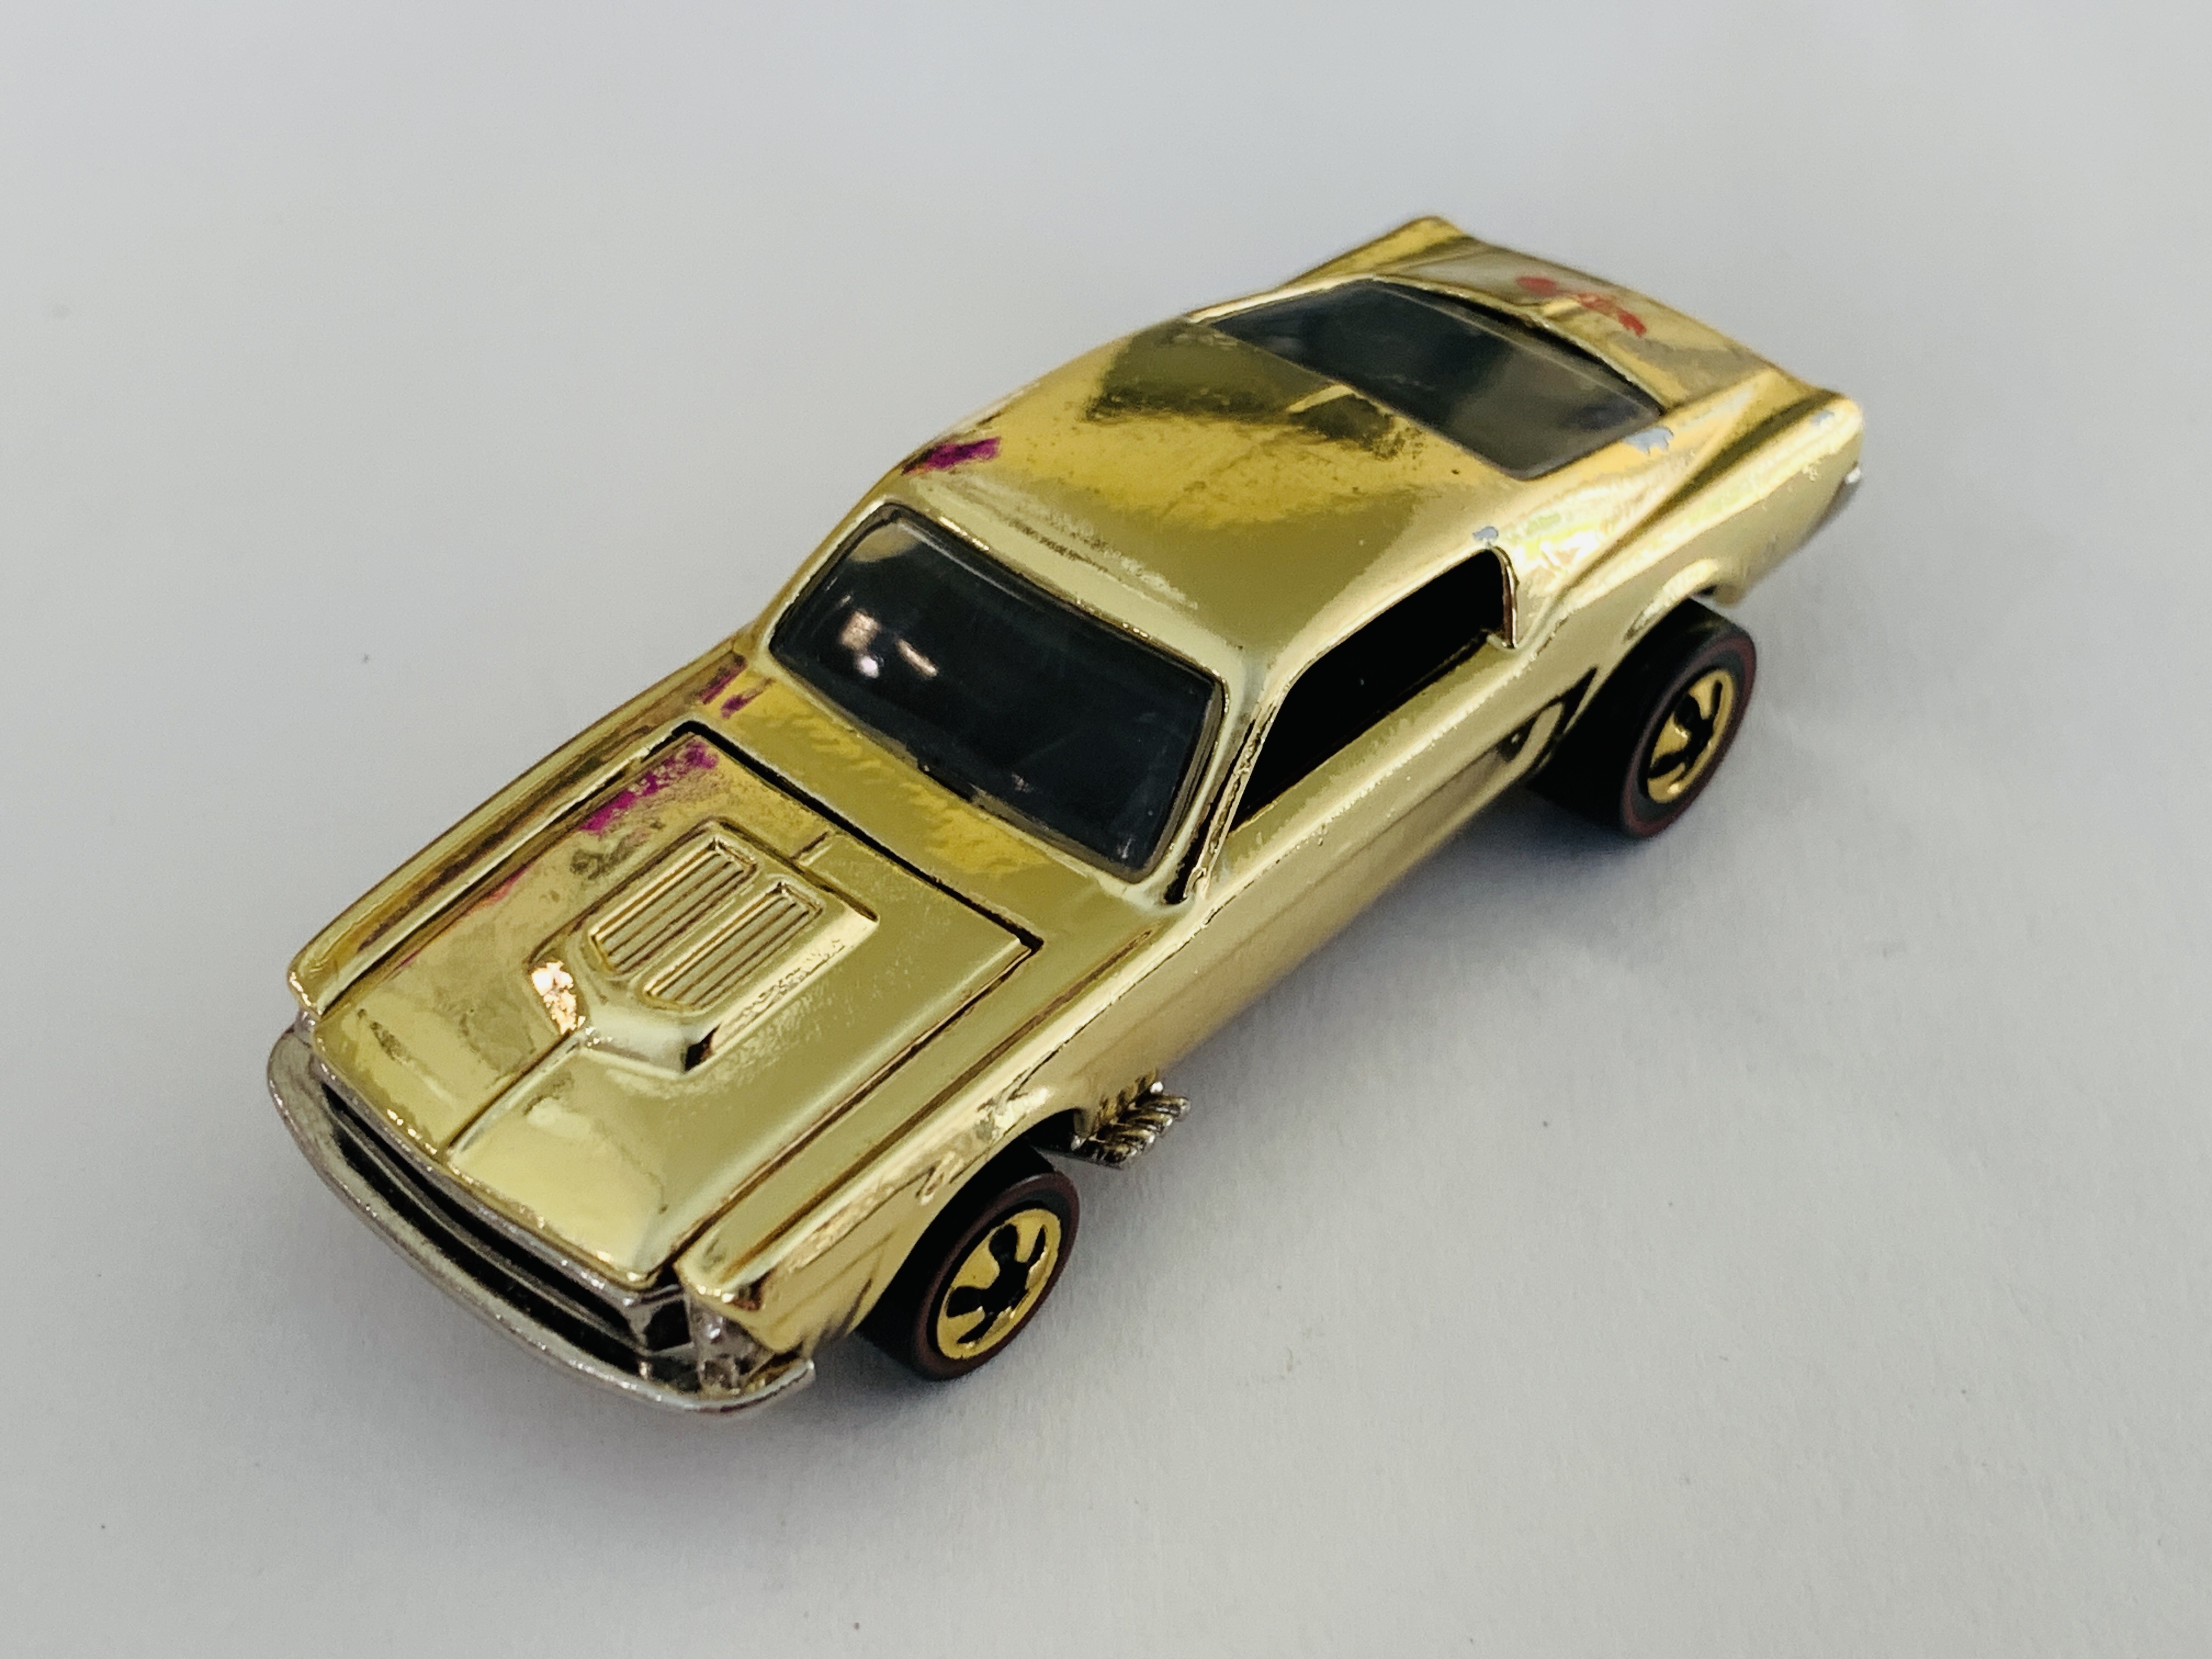 Hot Wheels FAO Schwarz Gold Series Custom Mustang - Please Read